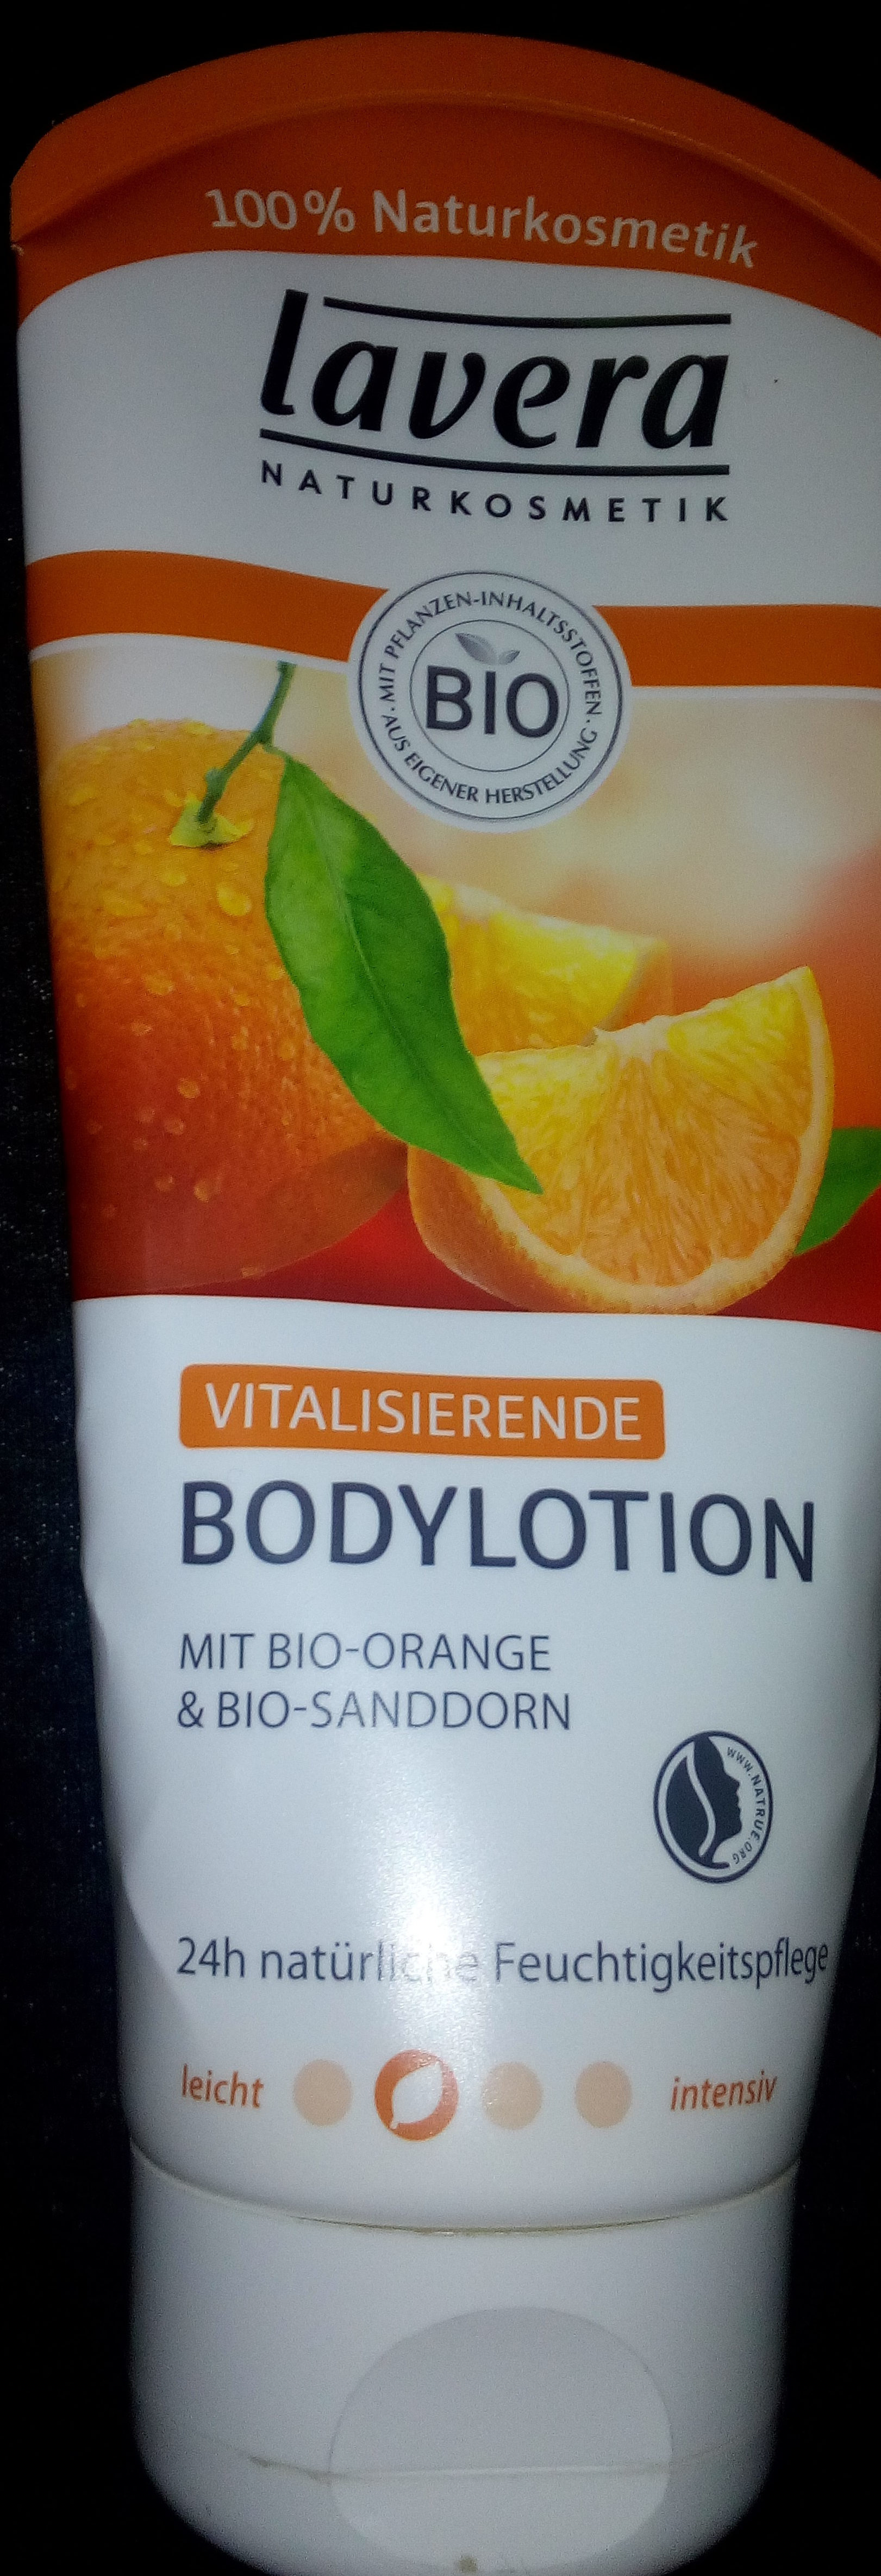 Vitalisierende Bodylotion mit Bio-Orange & Bio-Sanddorn - Produit - de